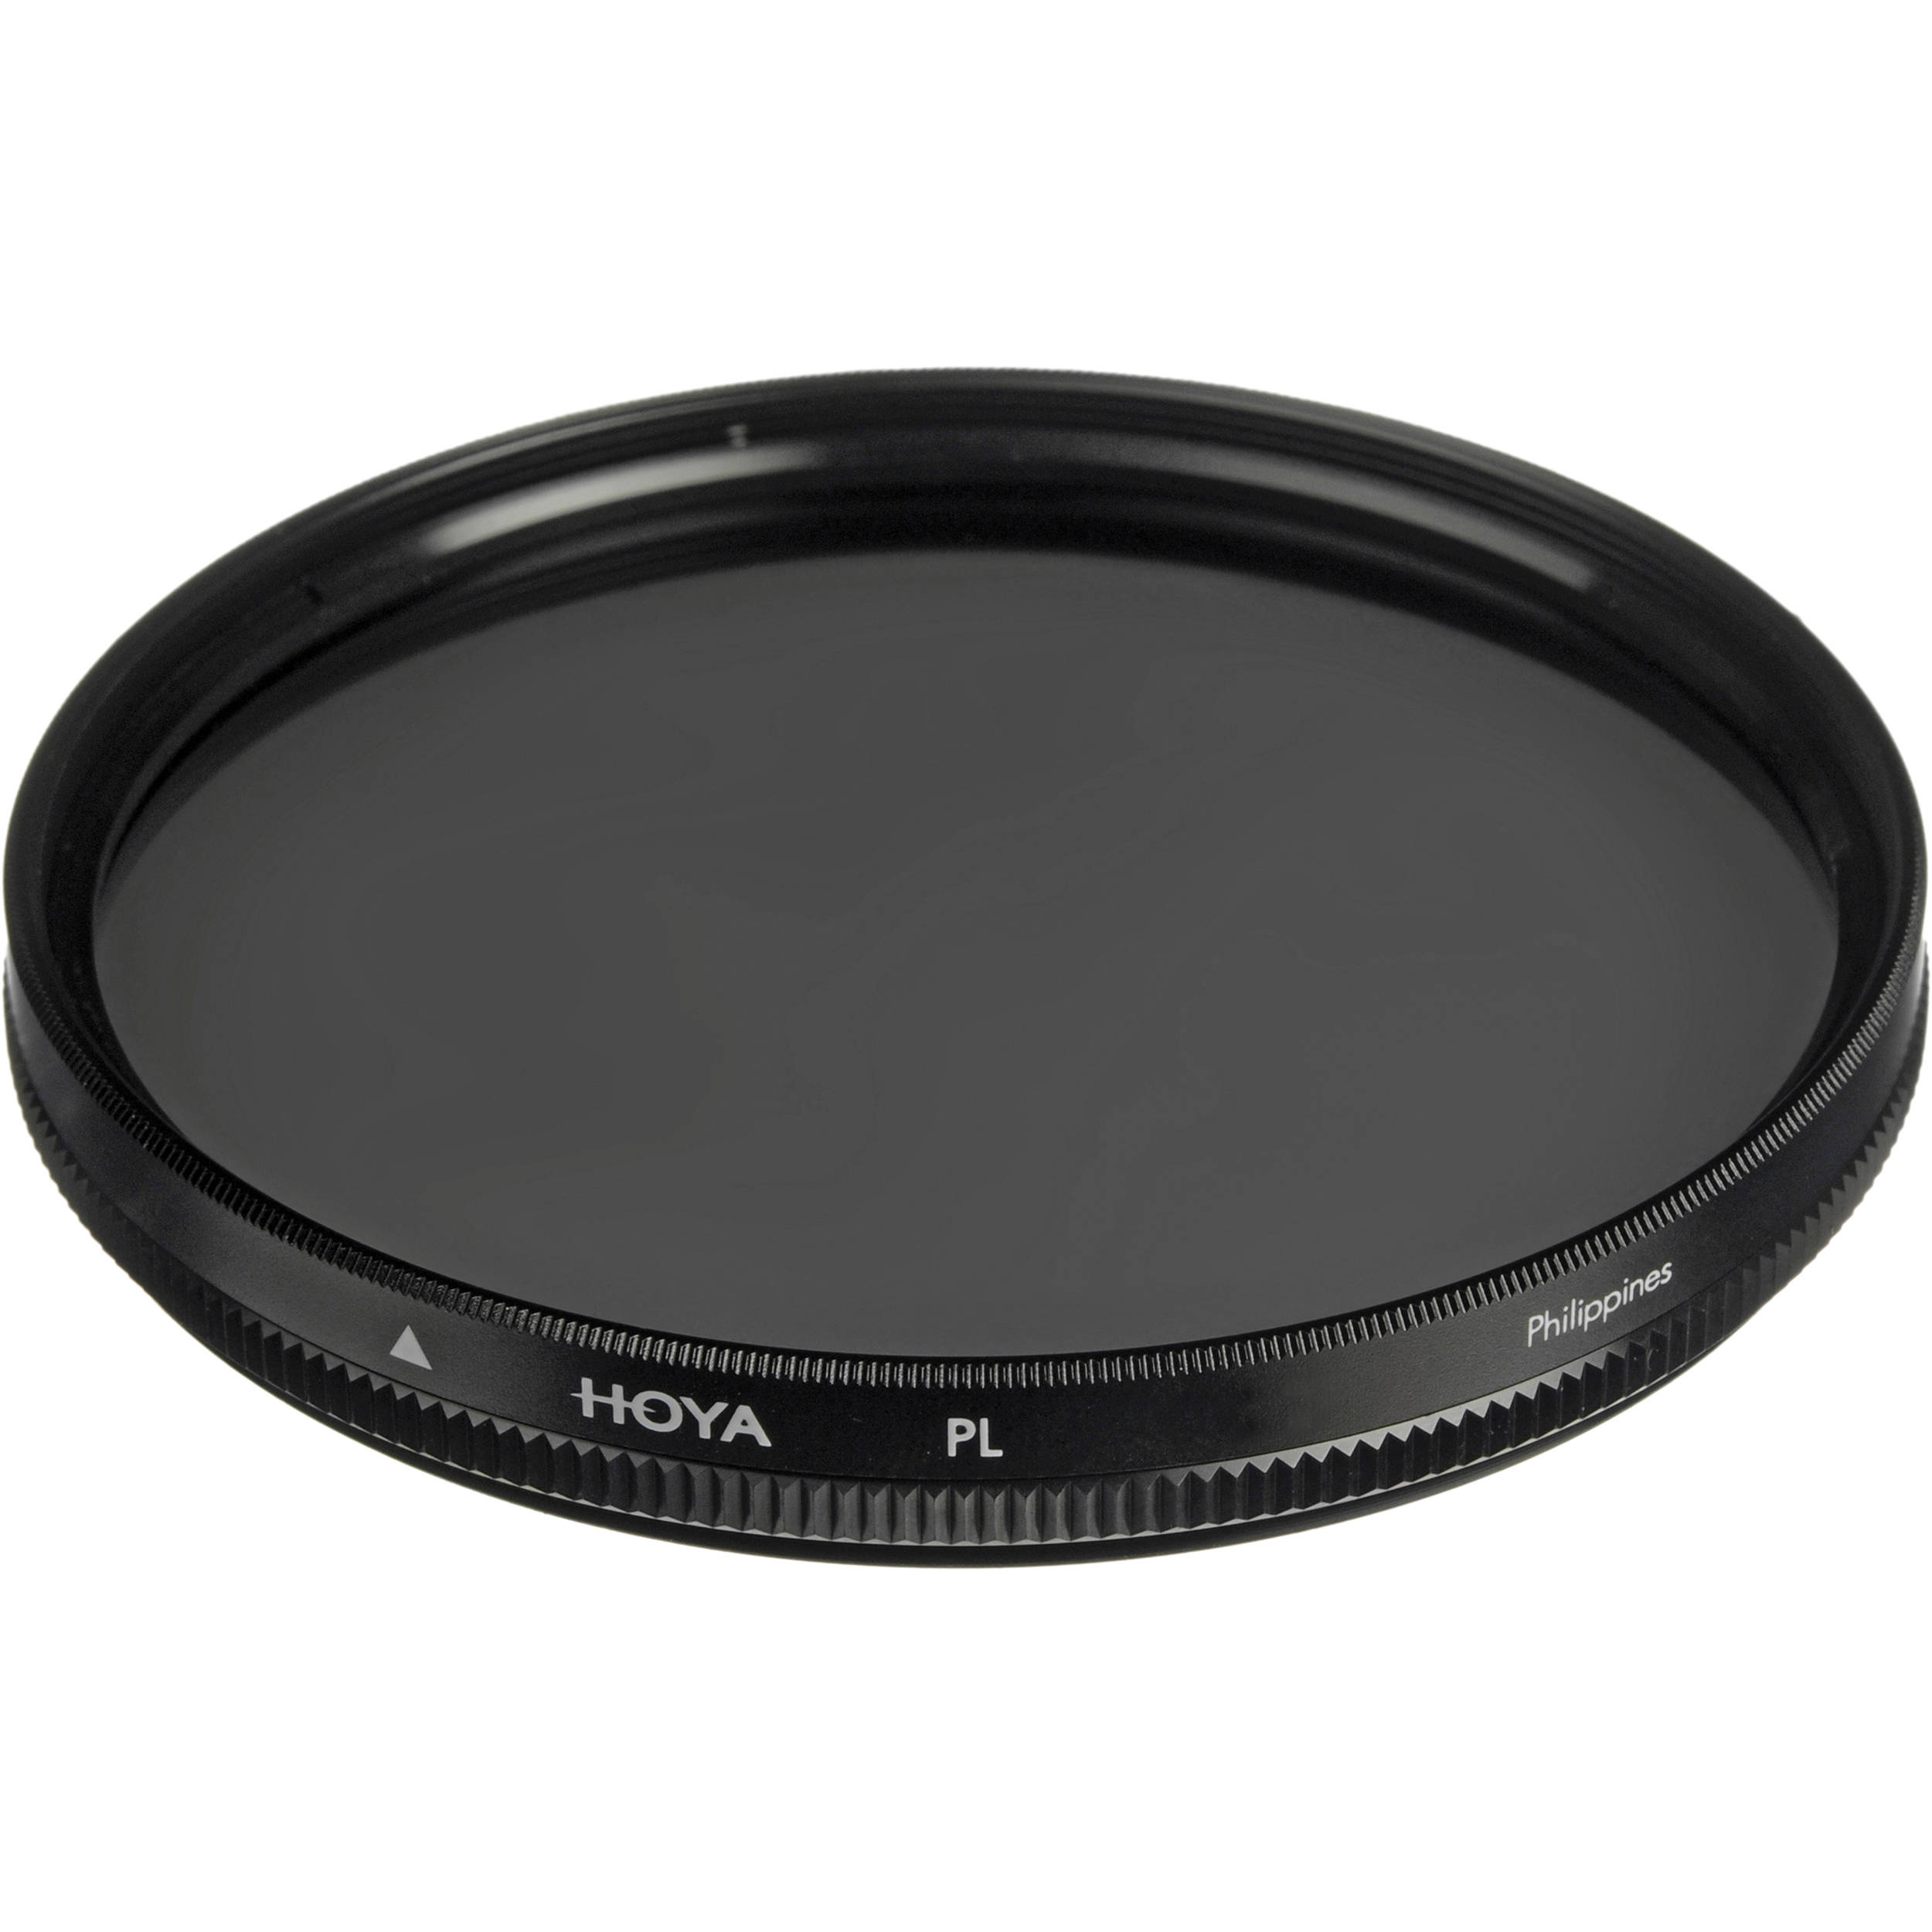 Hoya 95mm Linear Polarizer Glass Filter